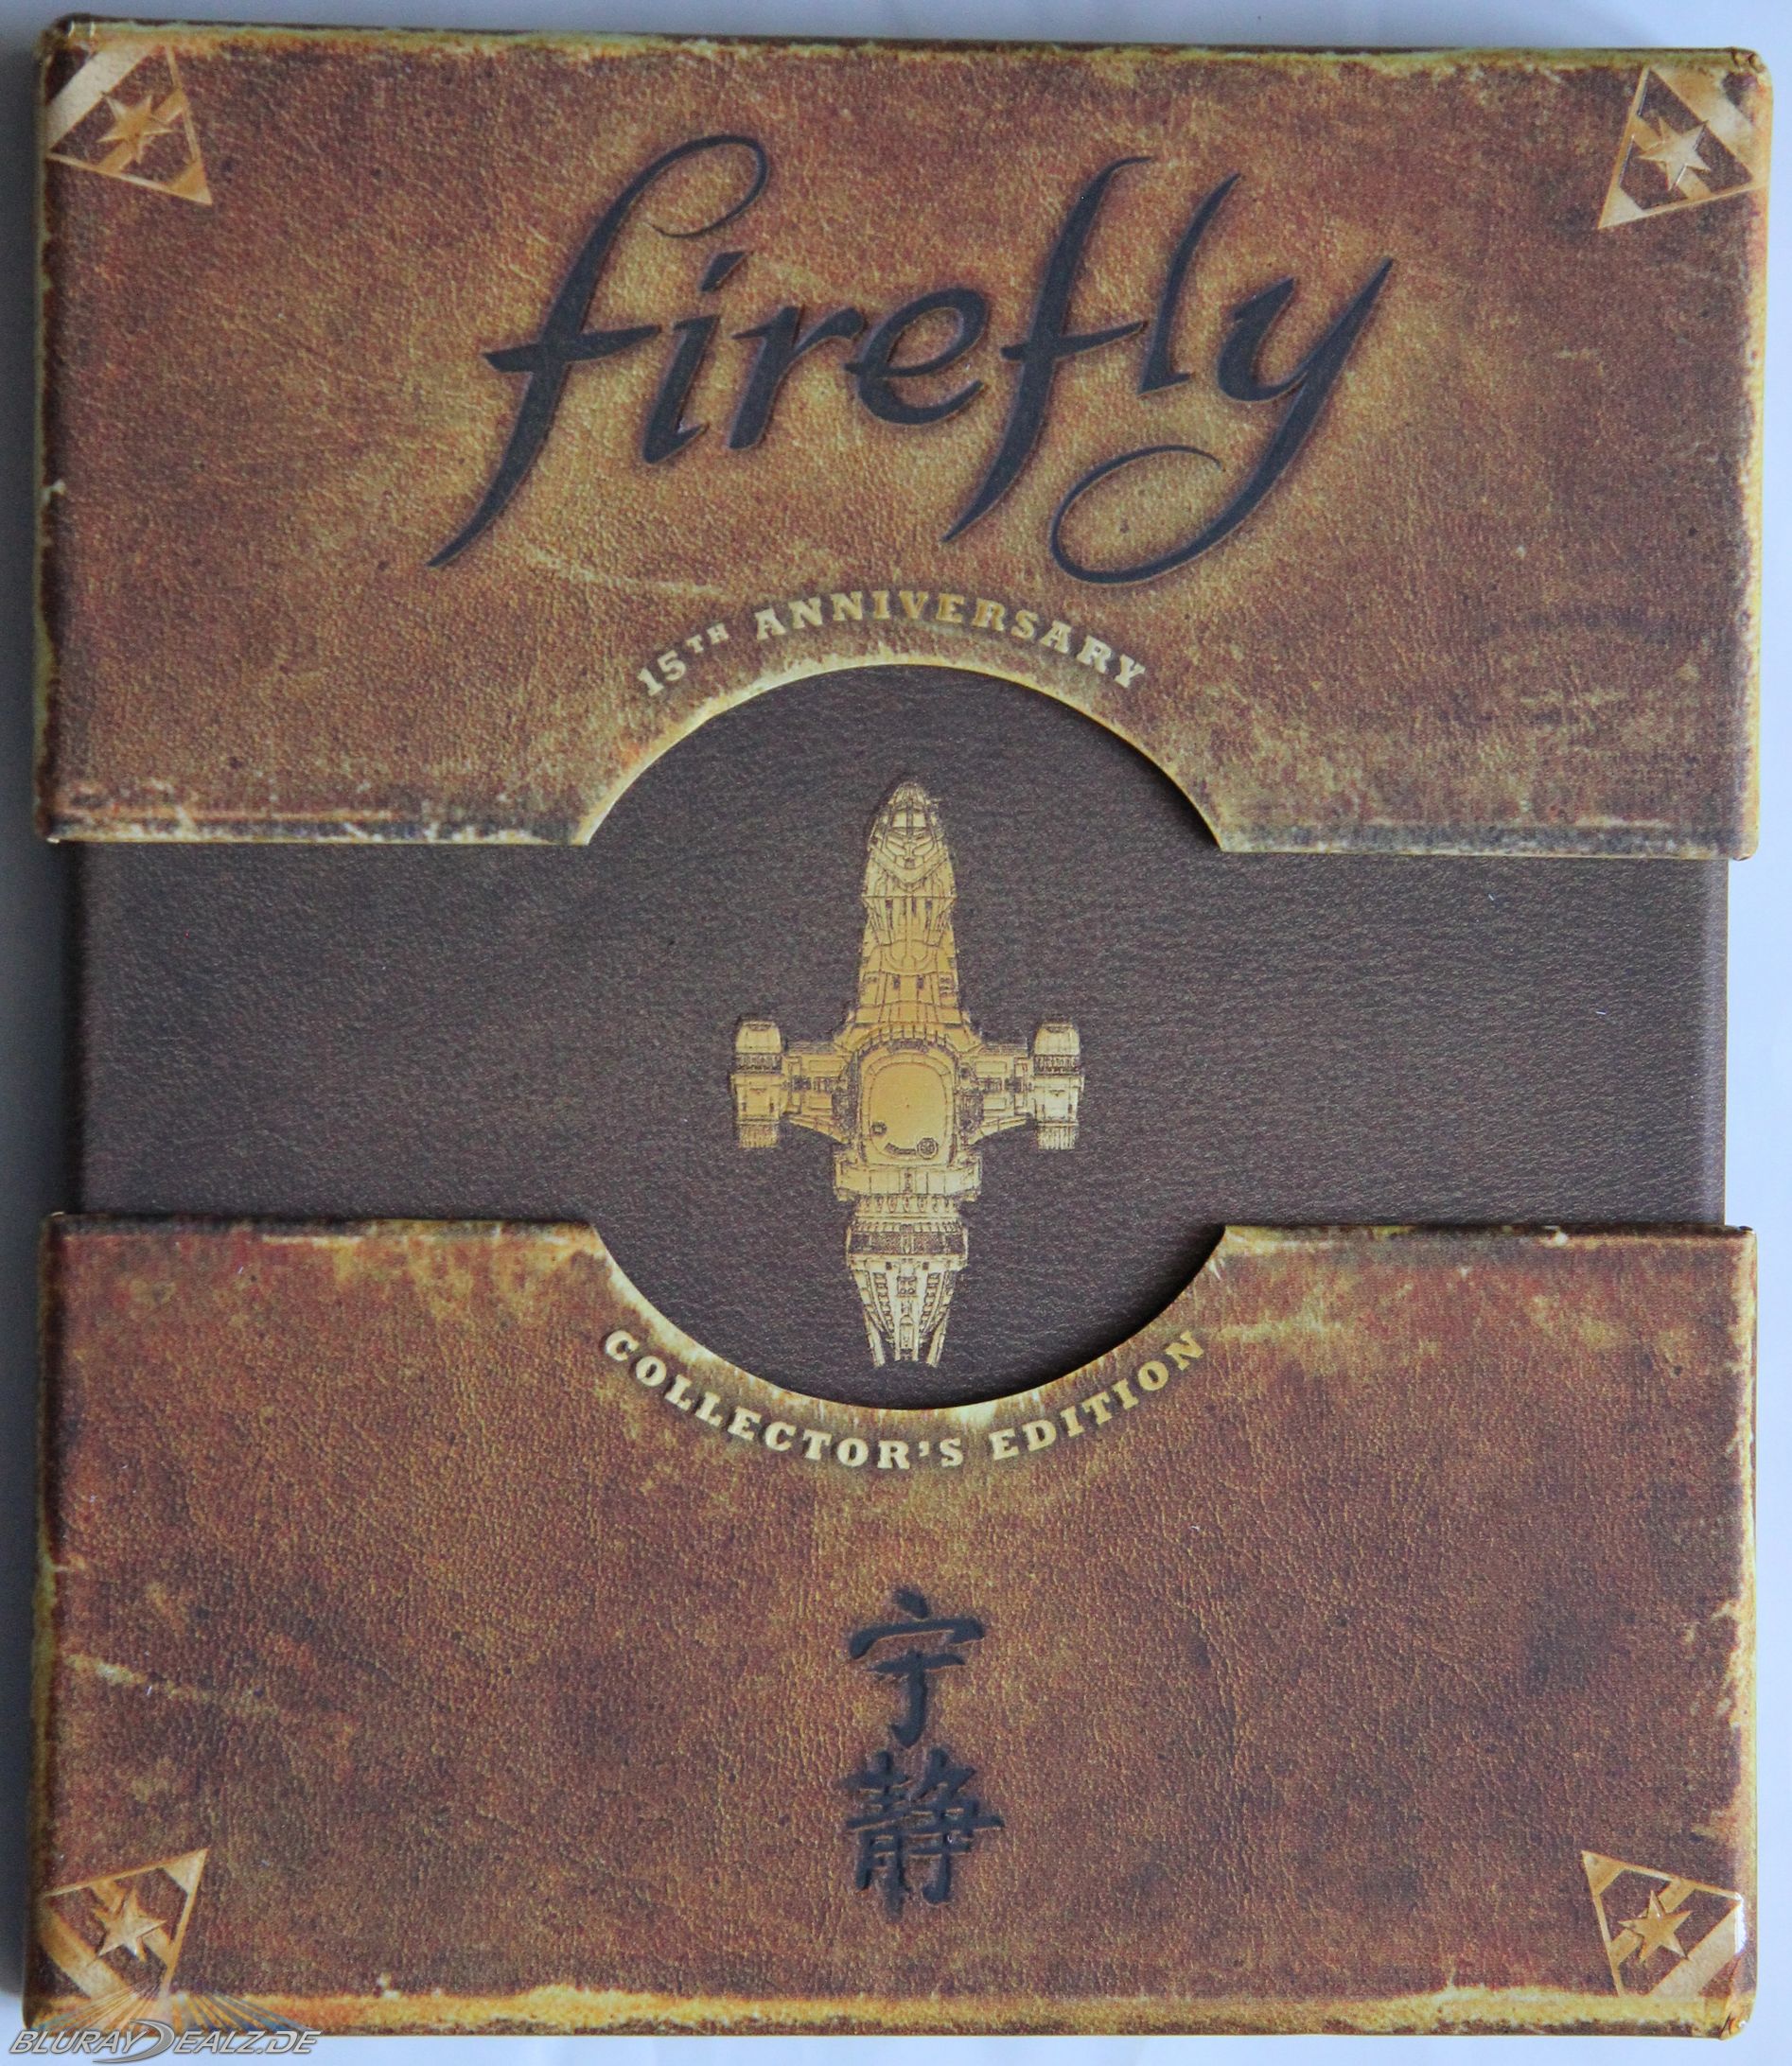 Firefly_US15_03.jpg